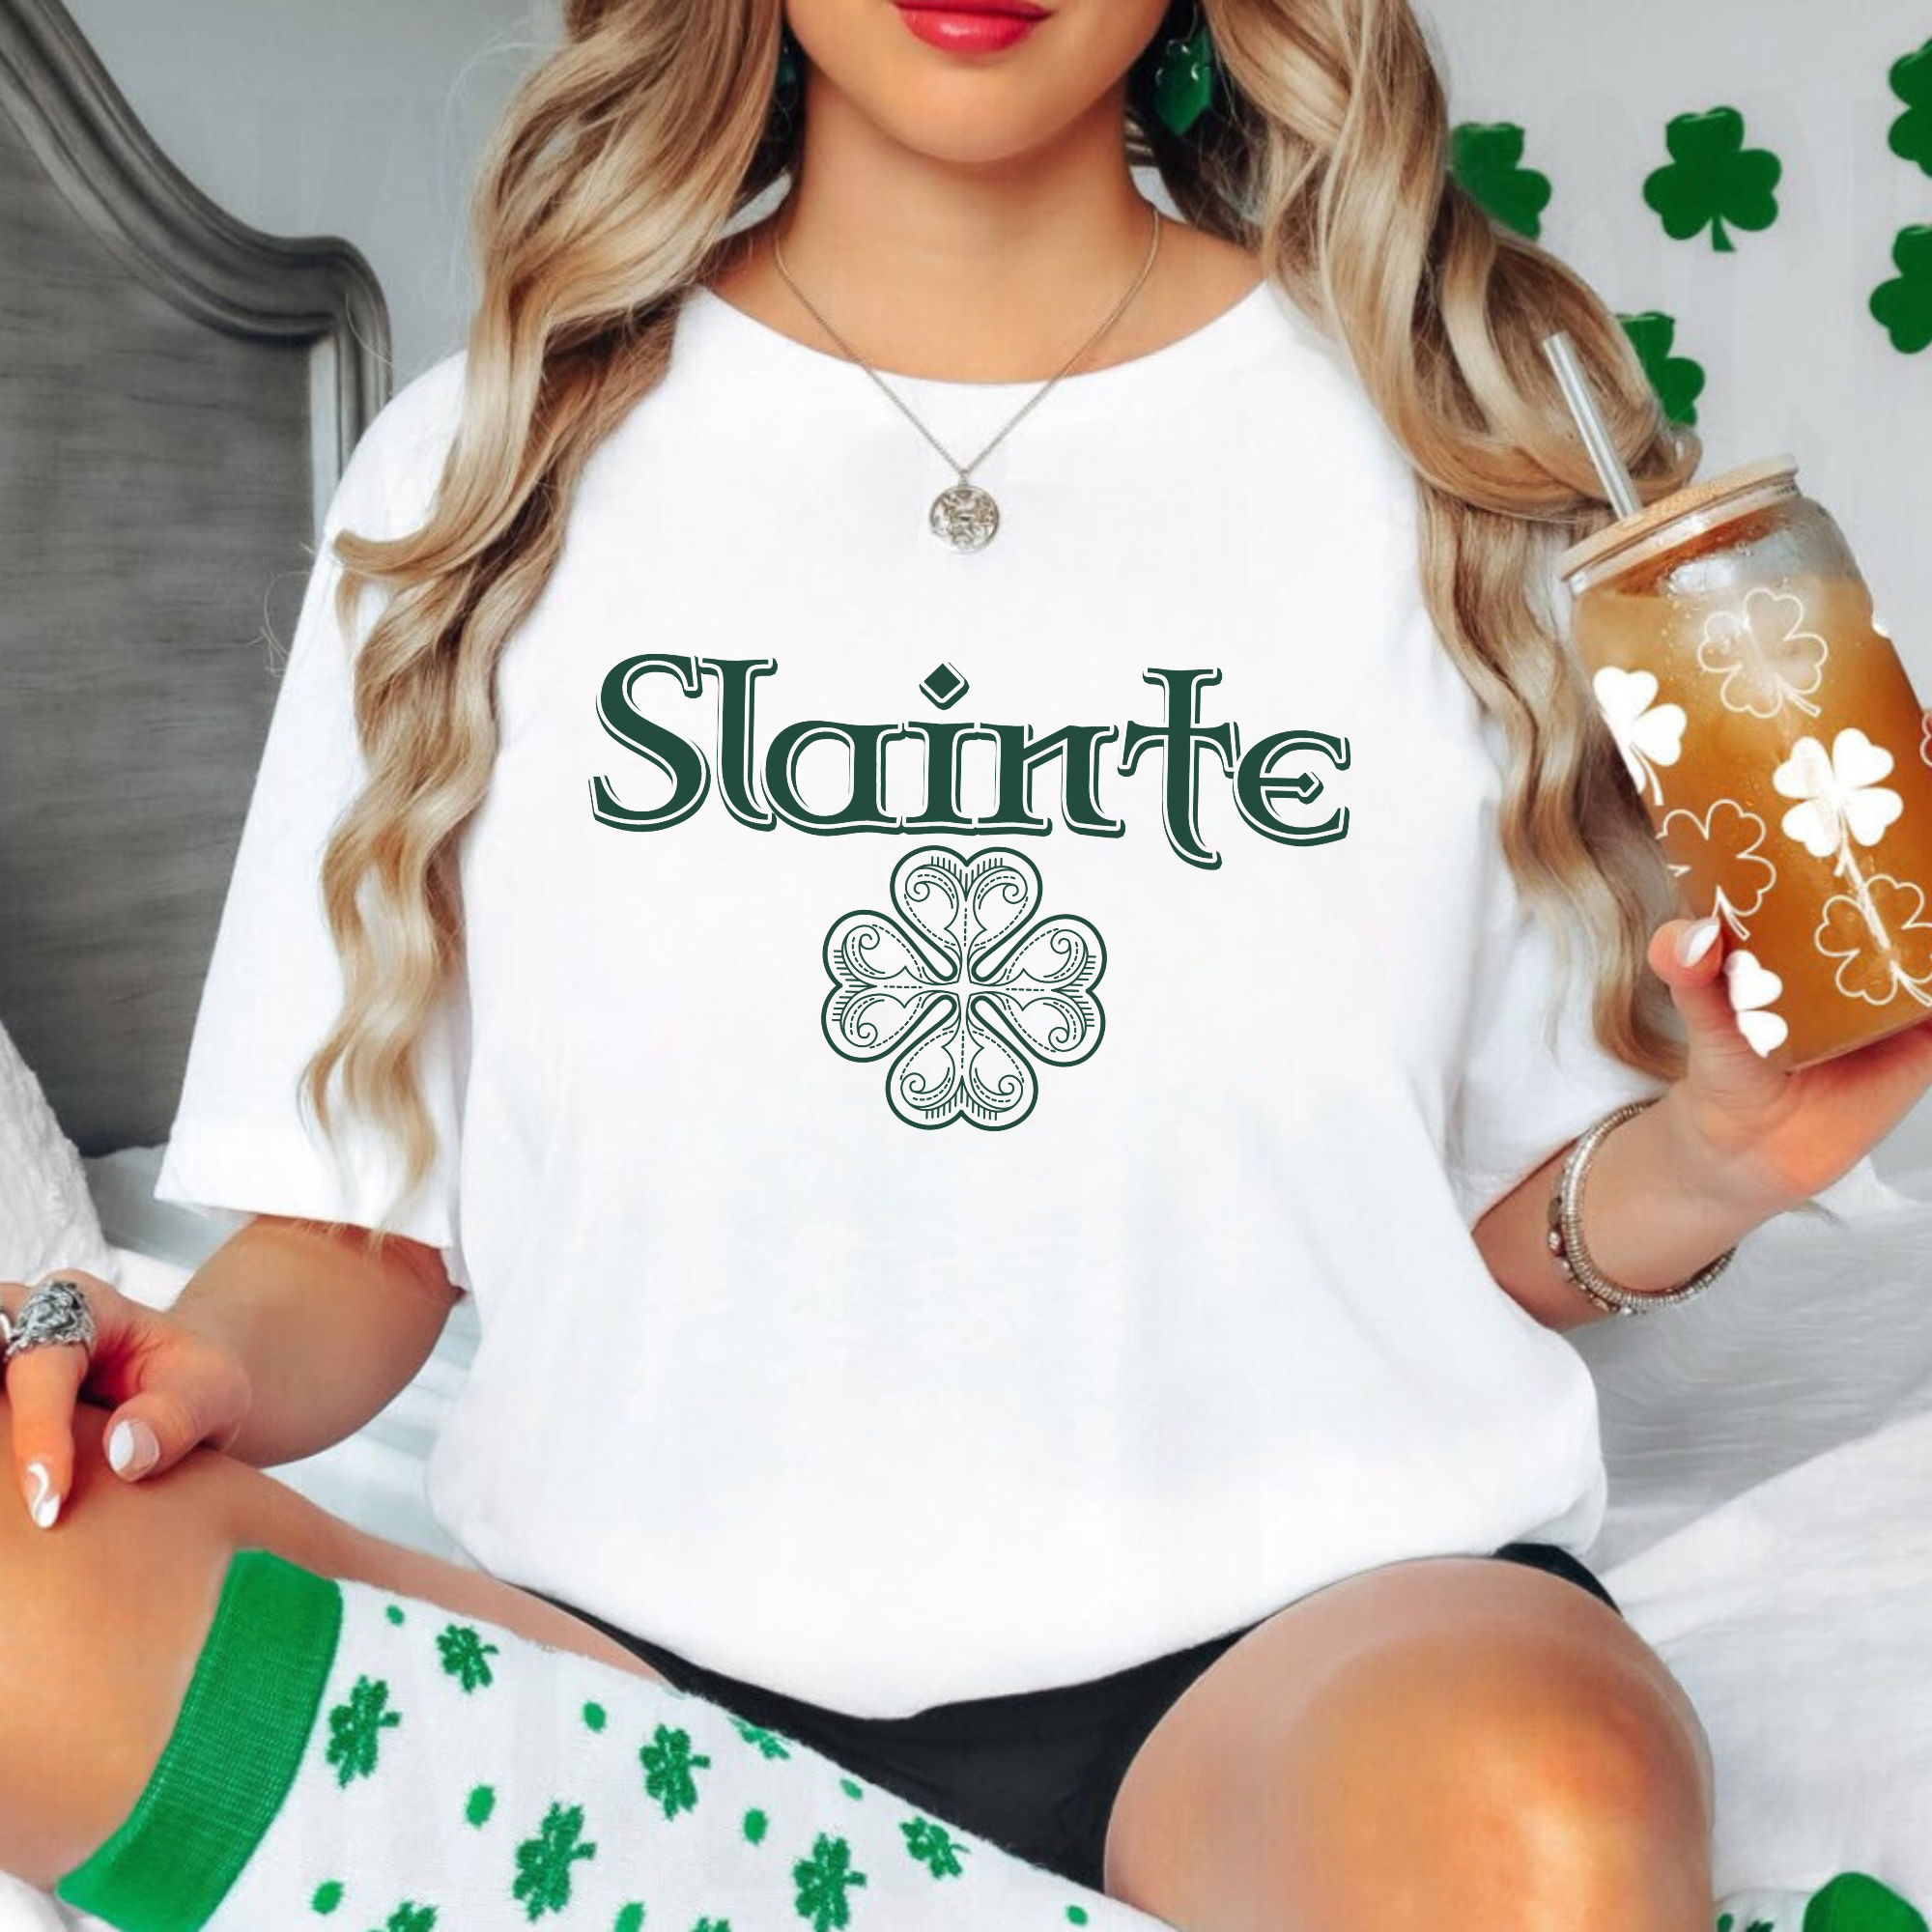 Slainte Shirt - St. Patrick's Day Gift